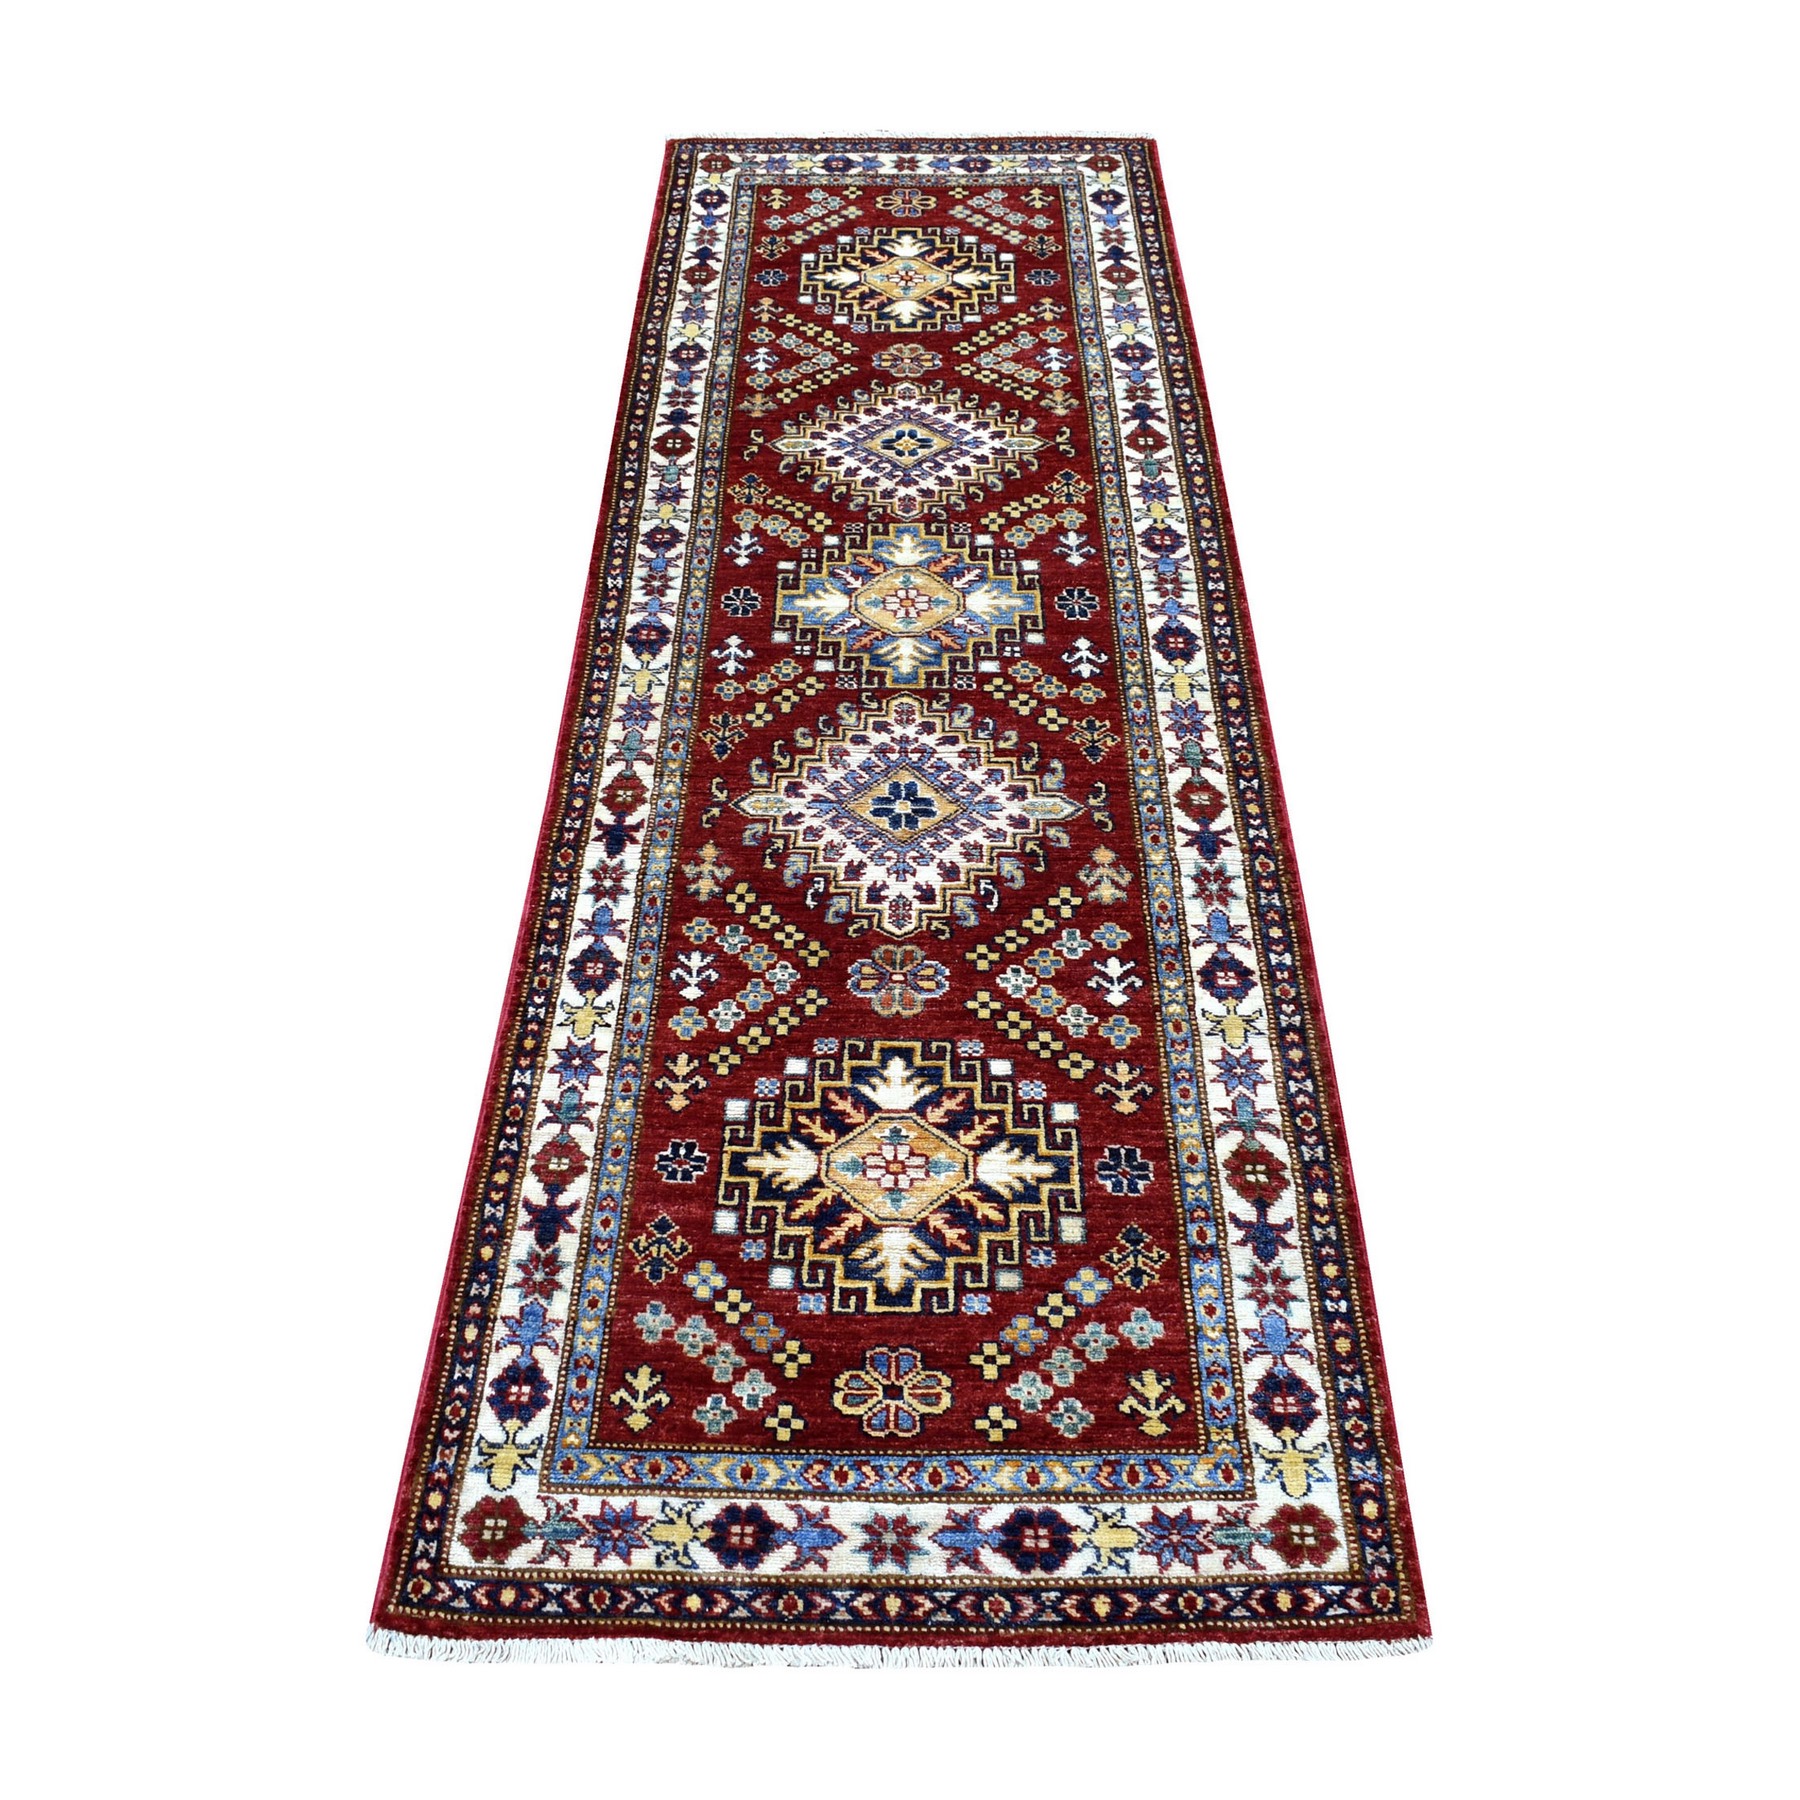 2'4"x7' Deep Rich Red Super Kazak with Tribal Medallions Hand Woven Soft Shiny Wool Runner Oriental Rug 